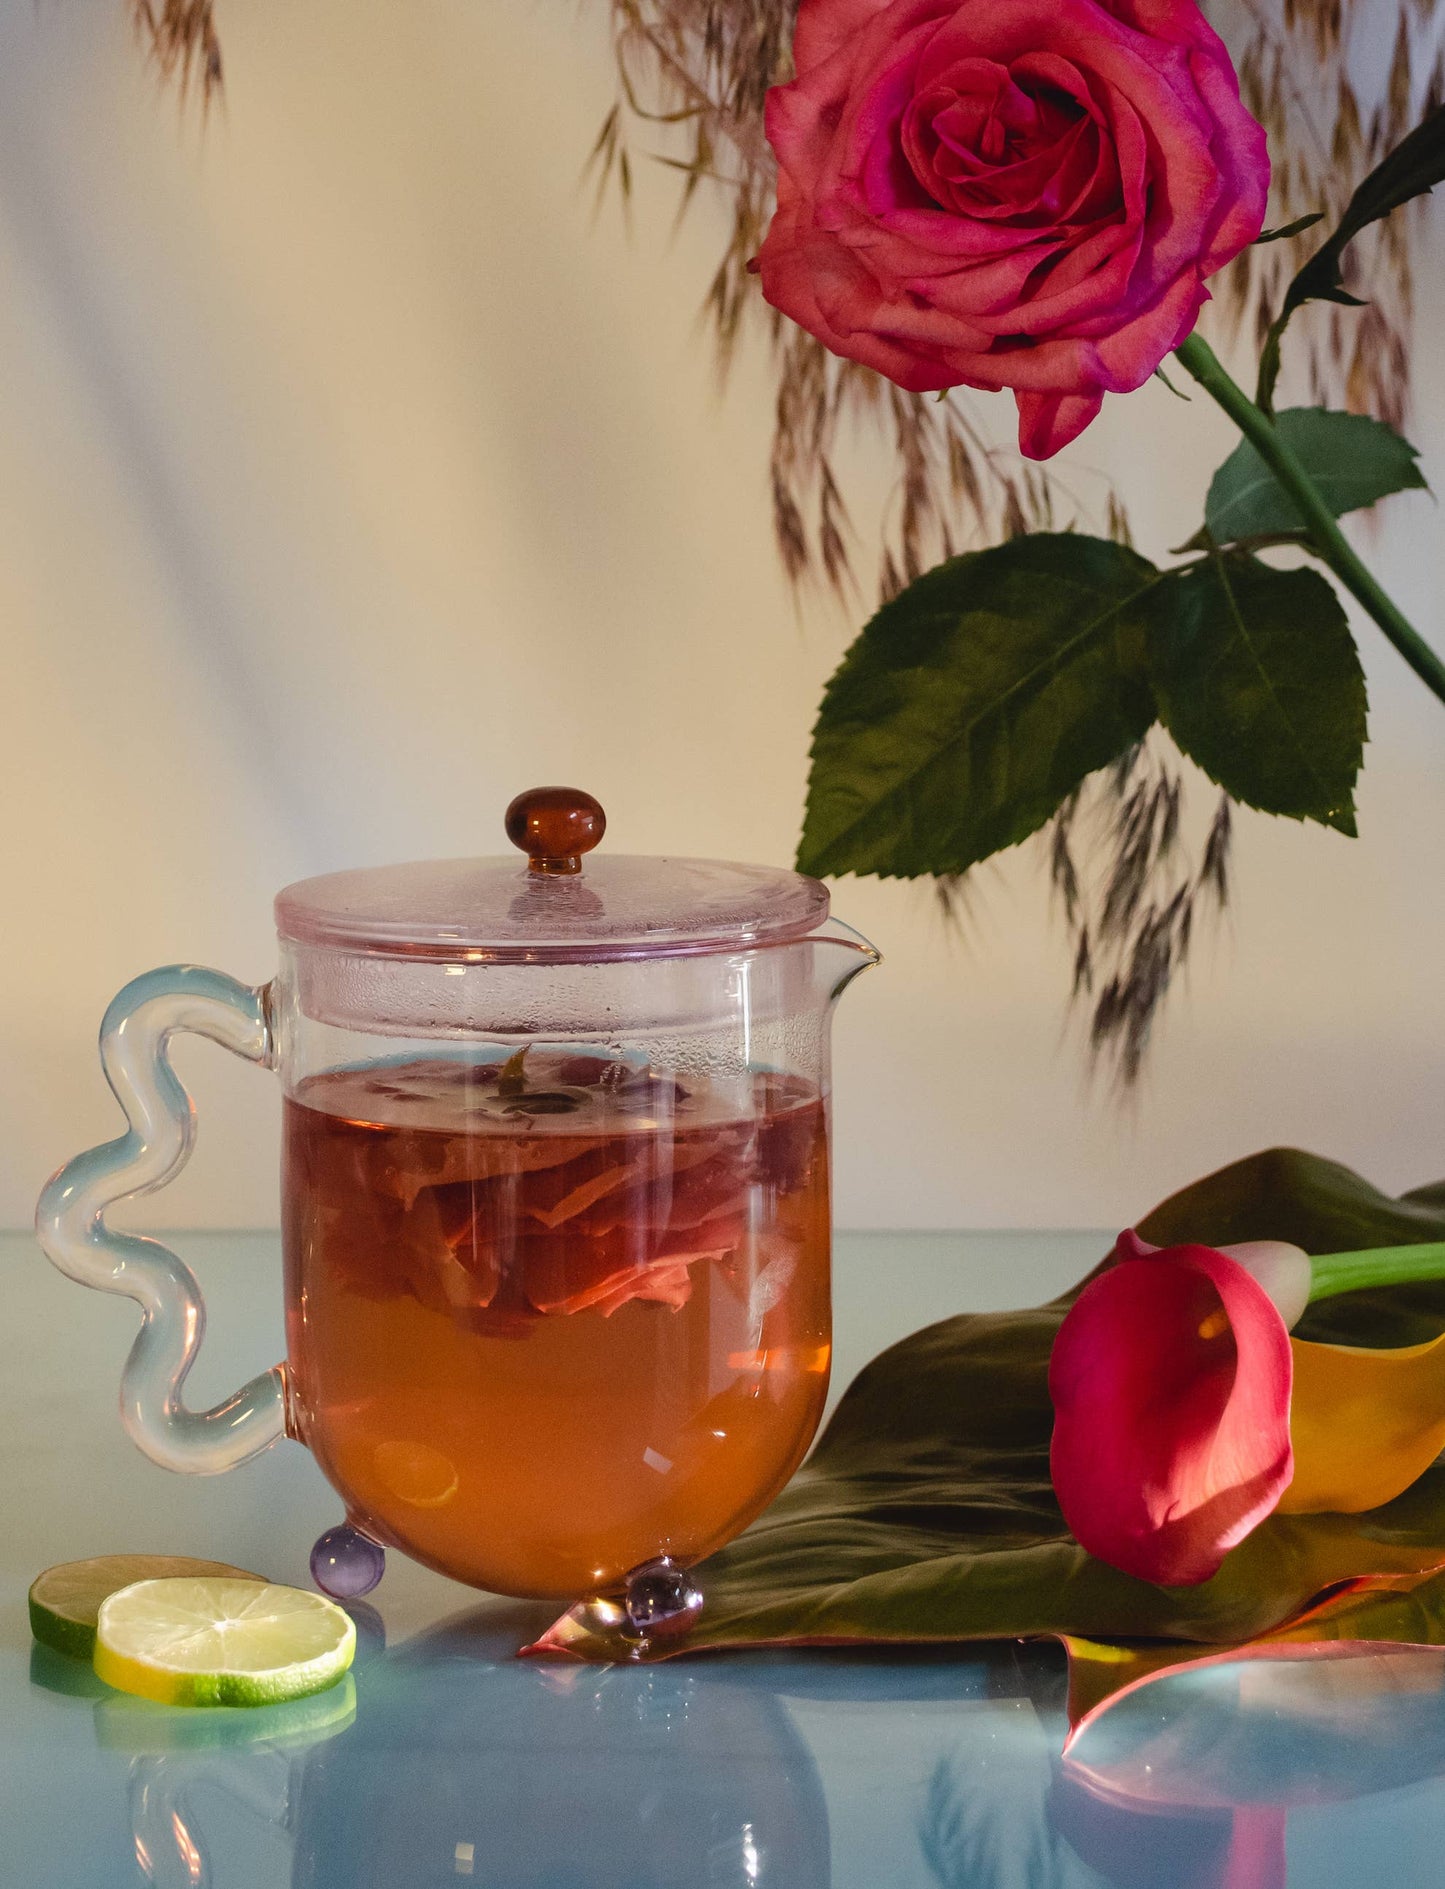 sophie lou jacobsen bloom teapot